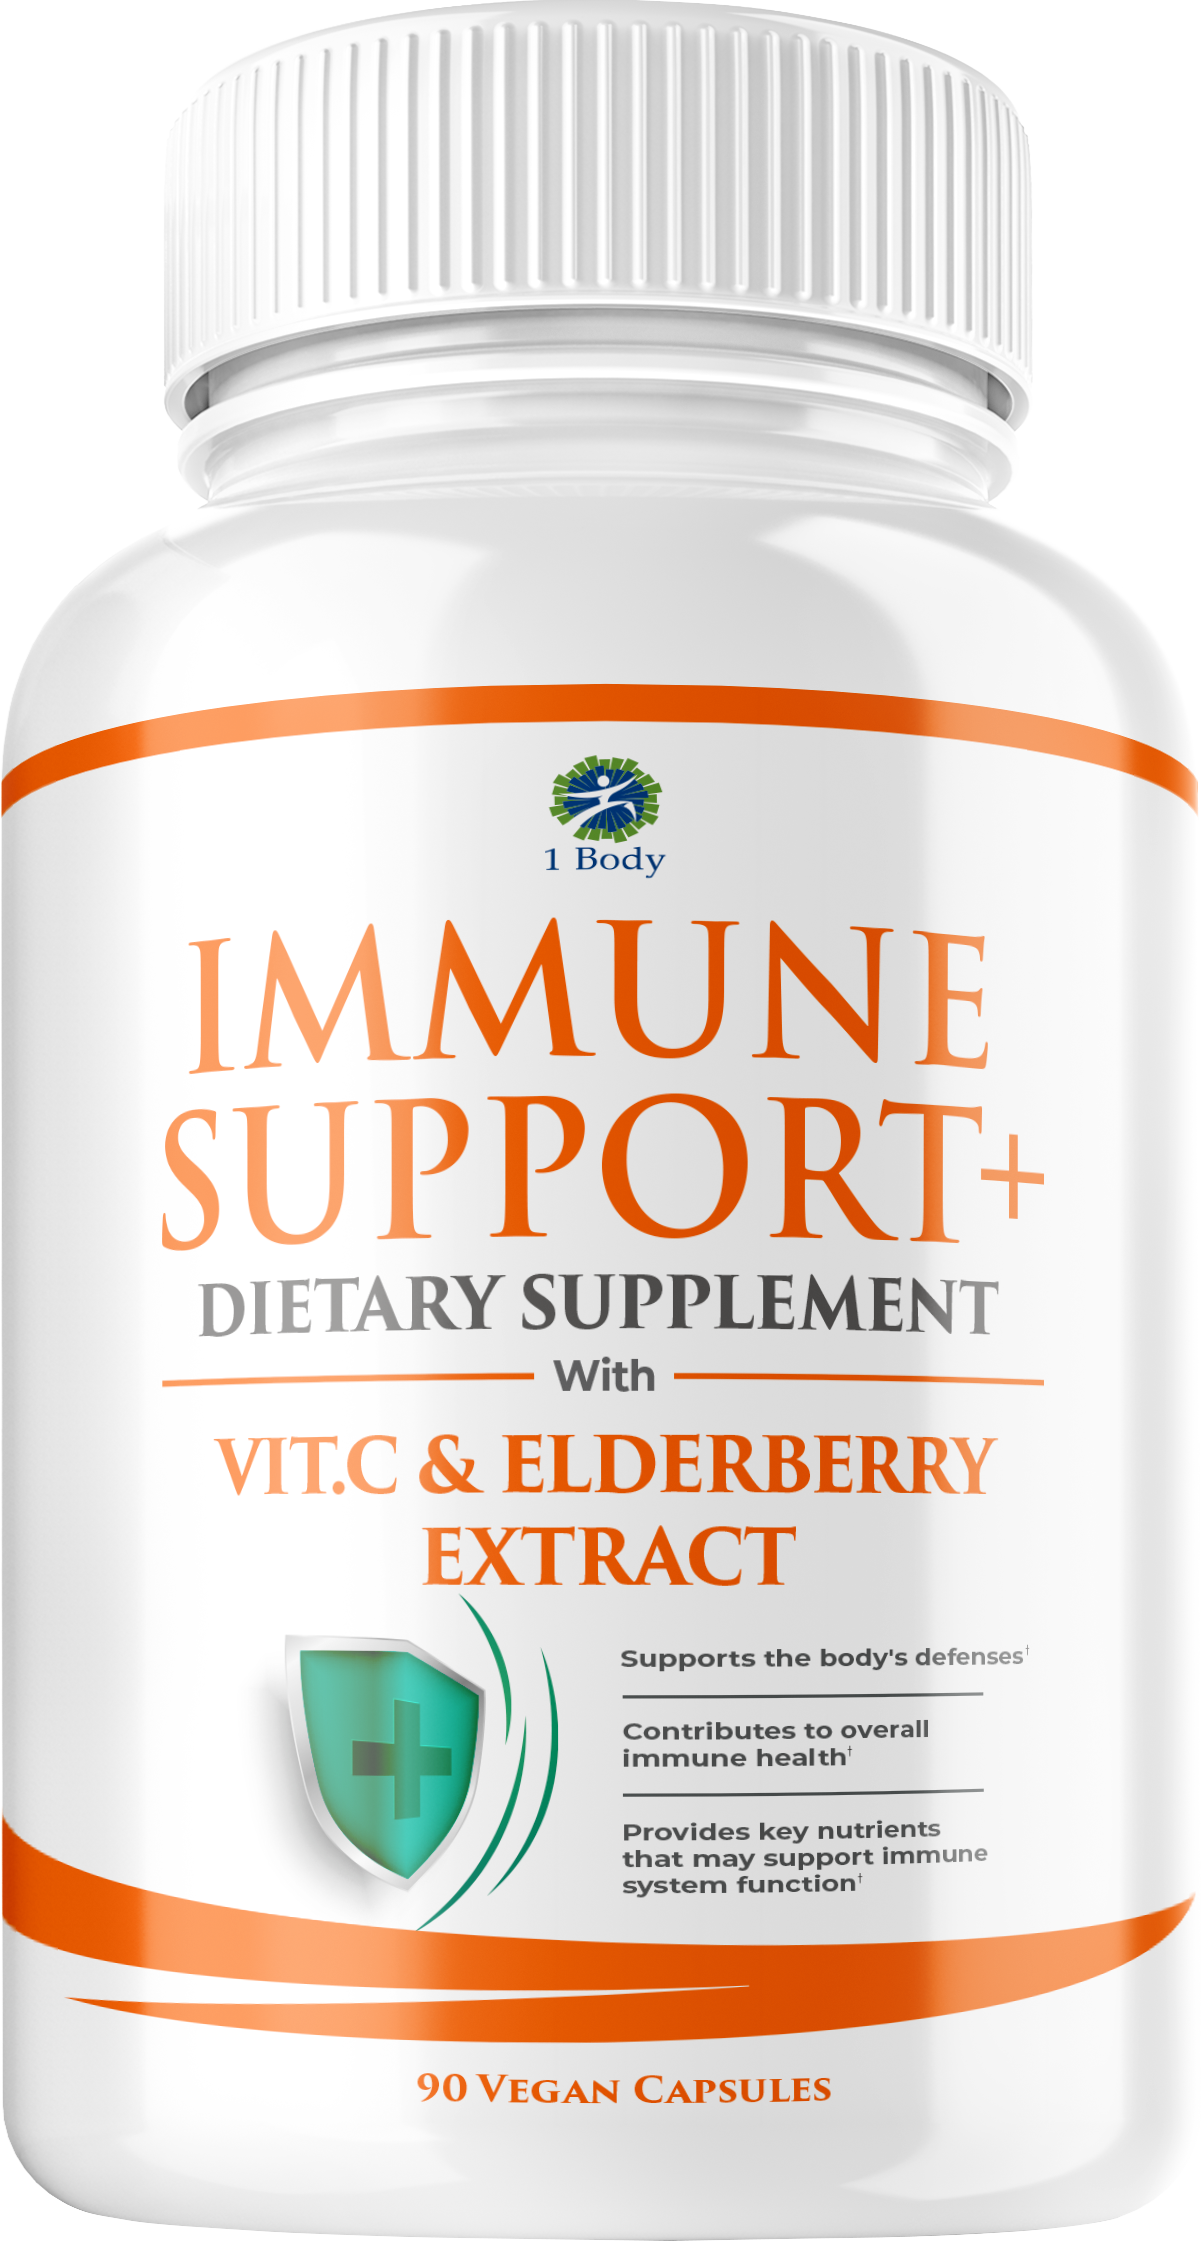 1 Body Immune Support +